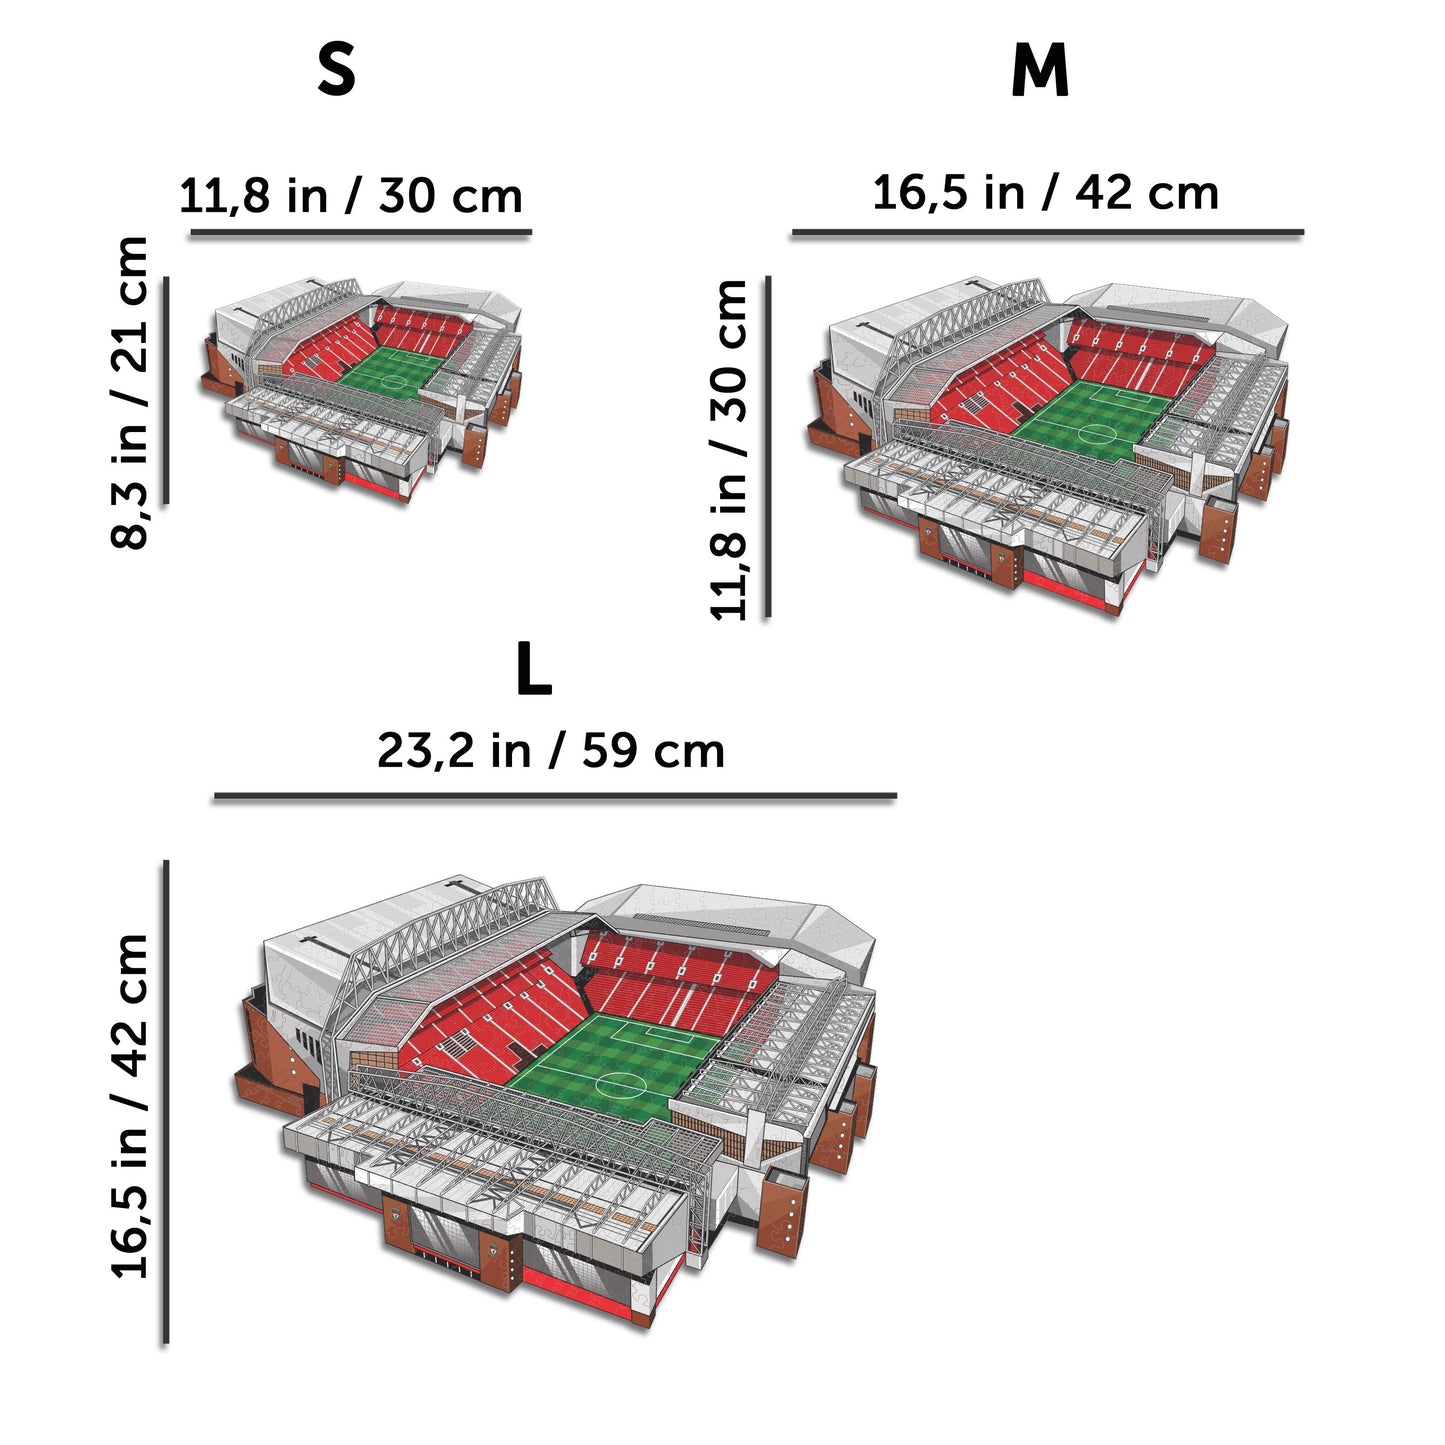 Liverpool FC® Anfield Stadium - Rompecabezas de Madera